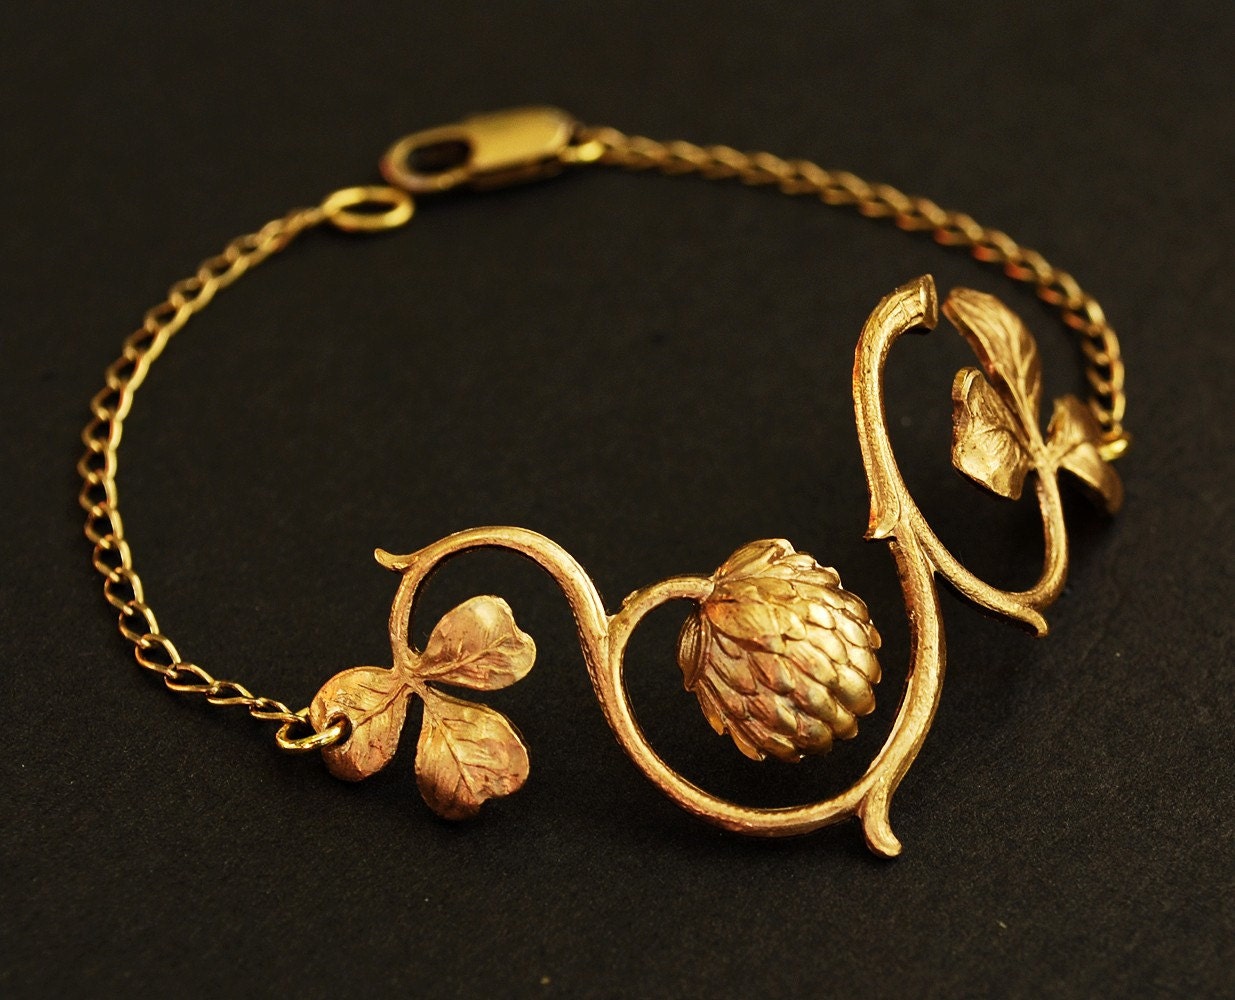 Lucky Day - clover leaf and flower bracelet